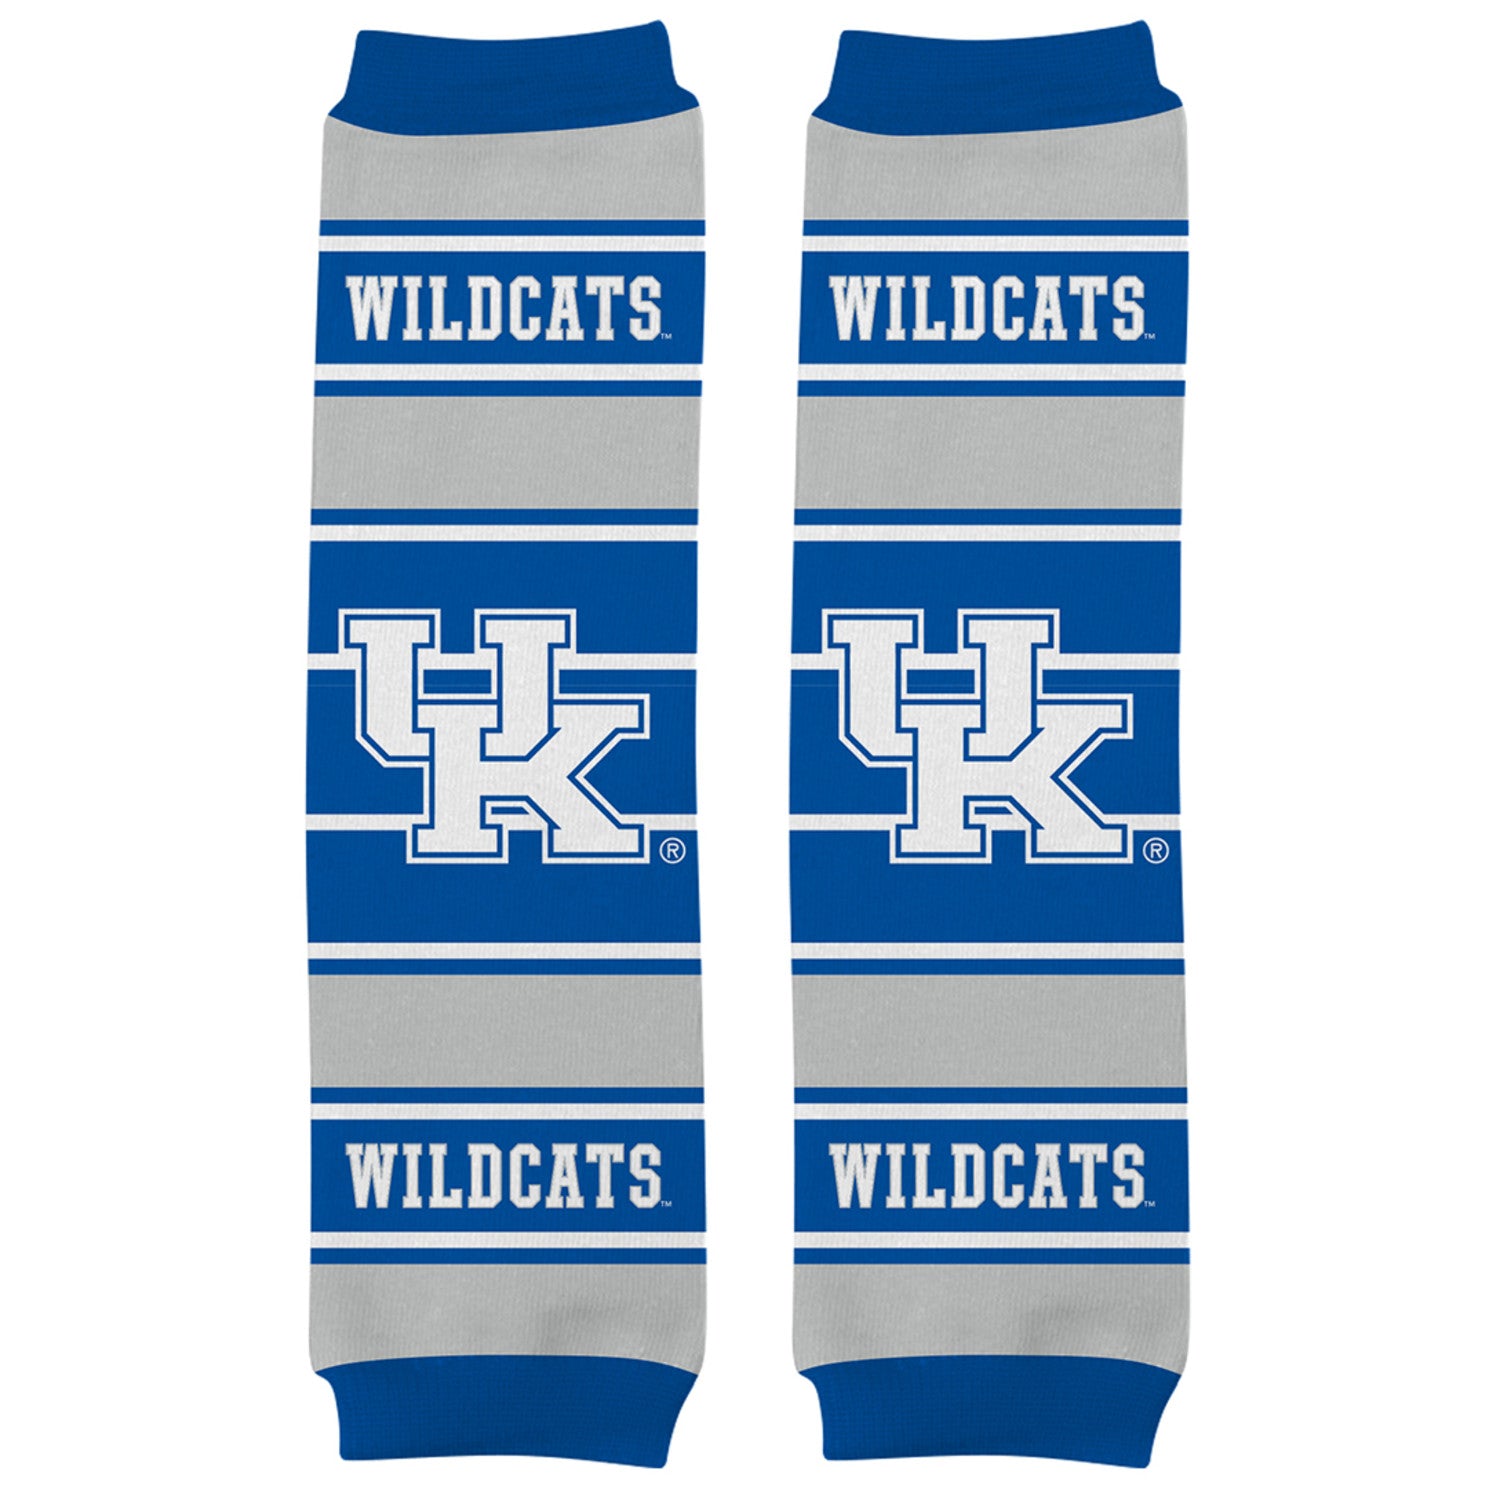 Kentucky Wildcats Baby Leg Warmers